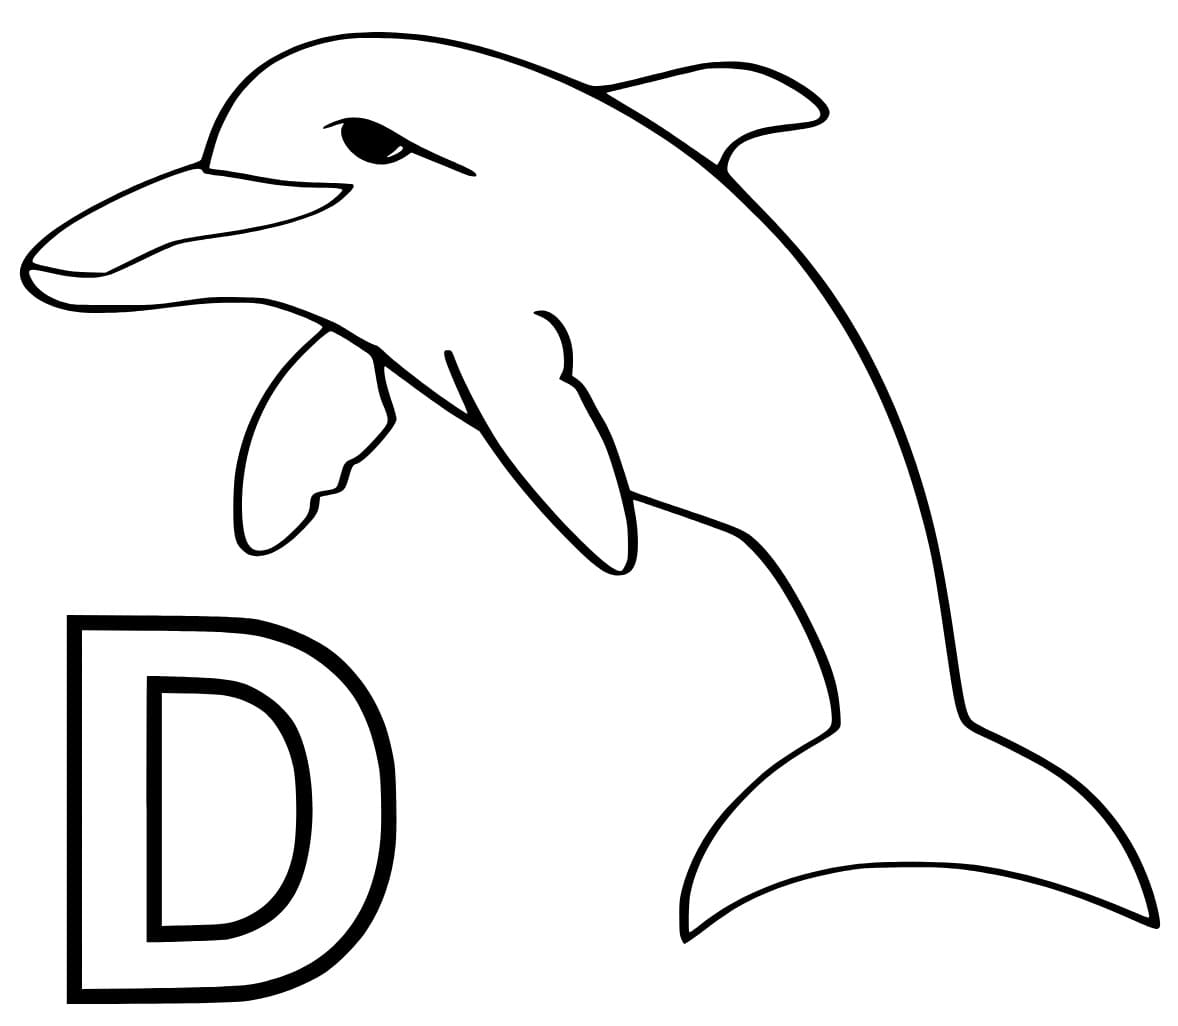 Kolorowanka Litera D jak Delfin